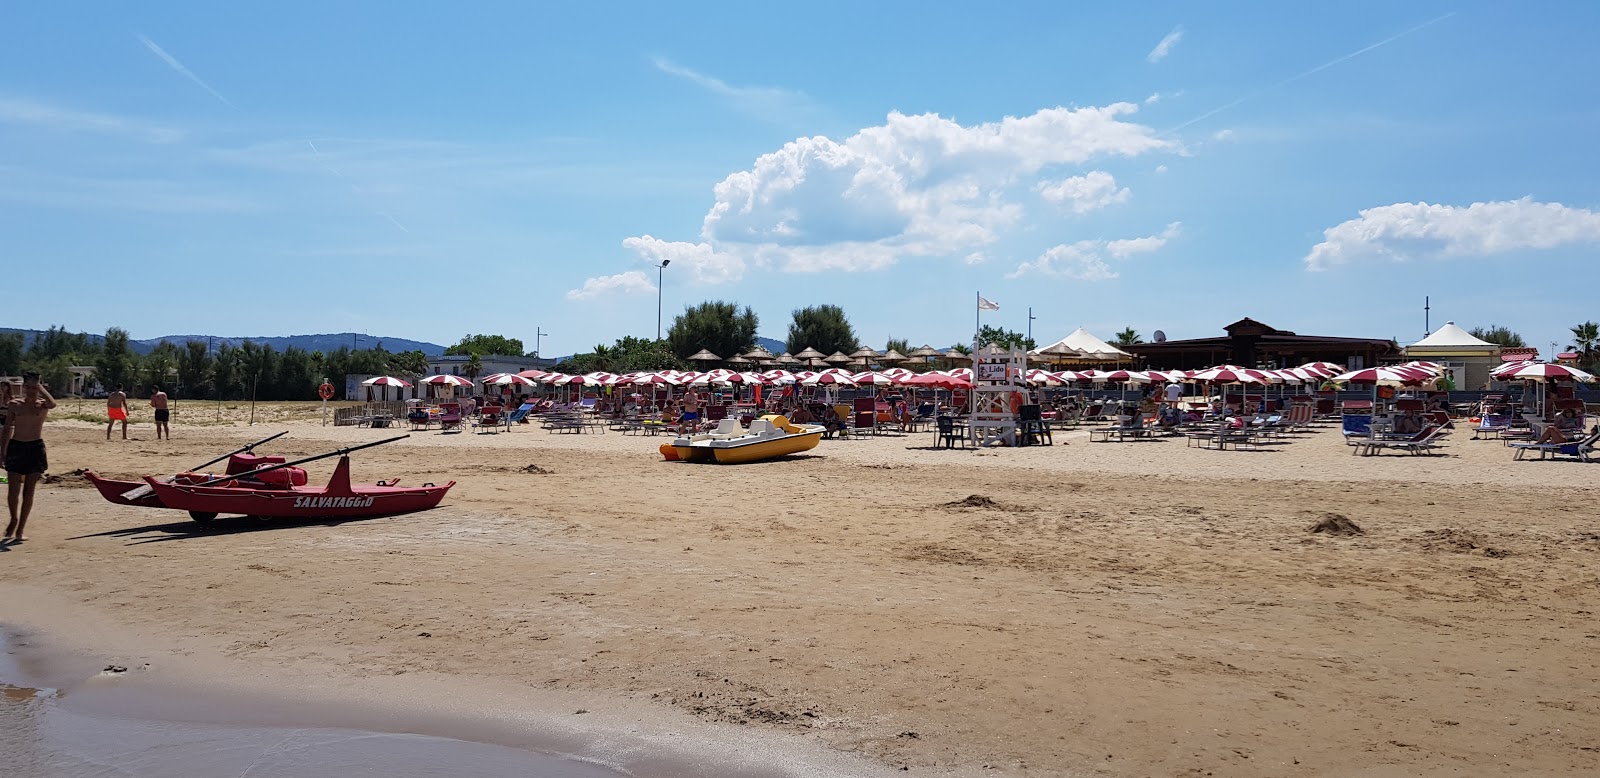 Foto von Spiaggia di Lido del Sole mit türkisfarbenes wasser Oberfläche